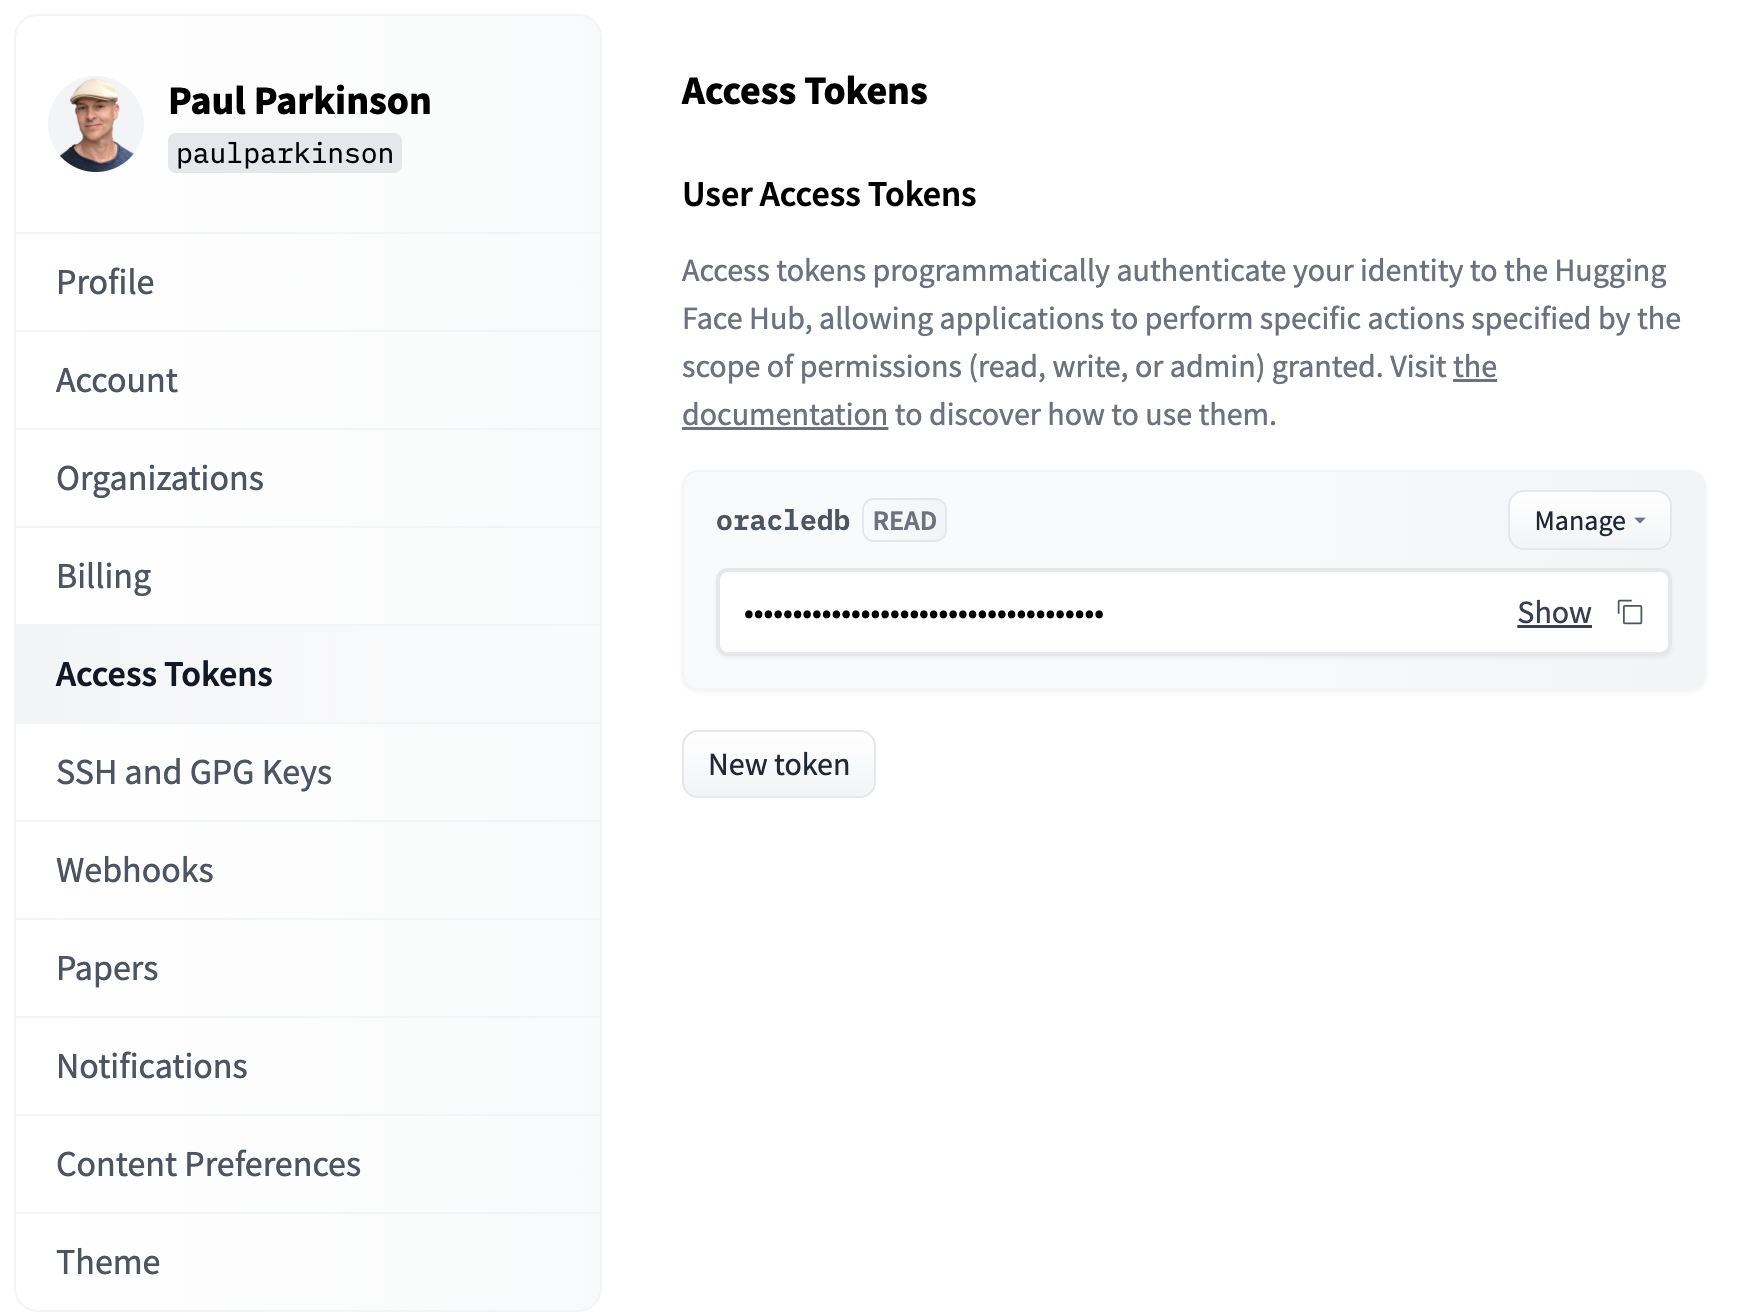 Access tokens tab